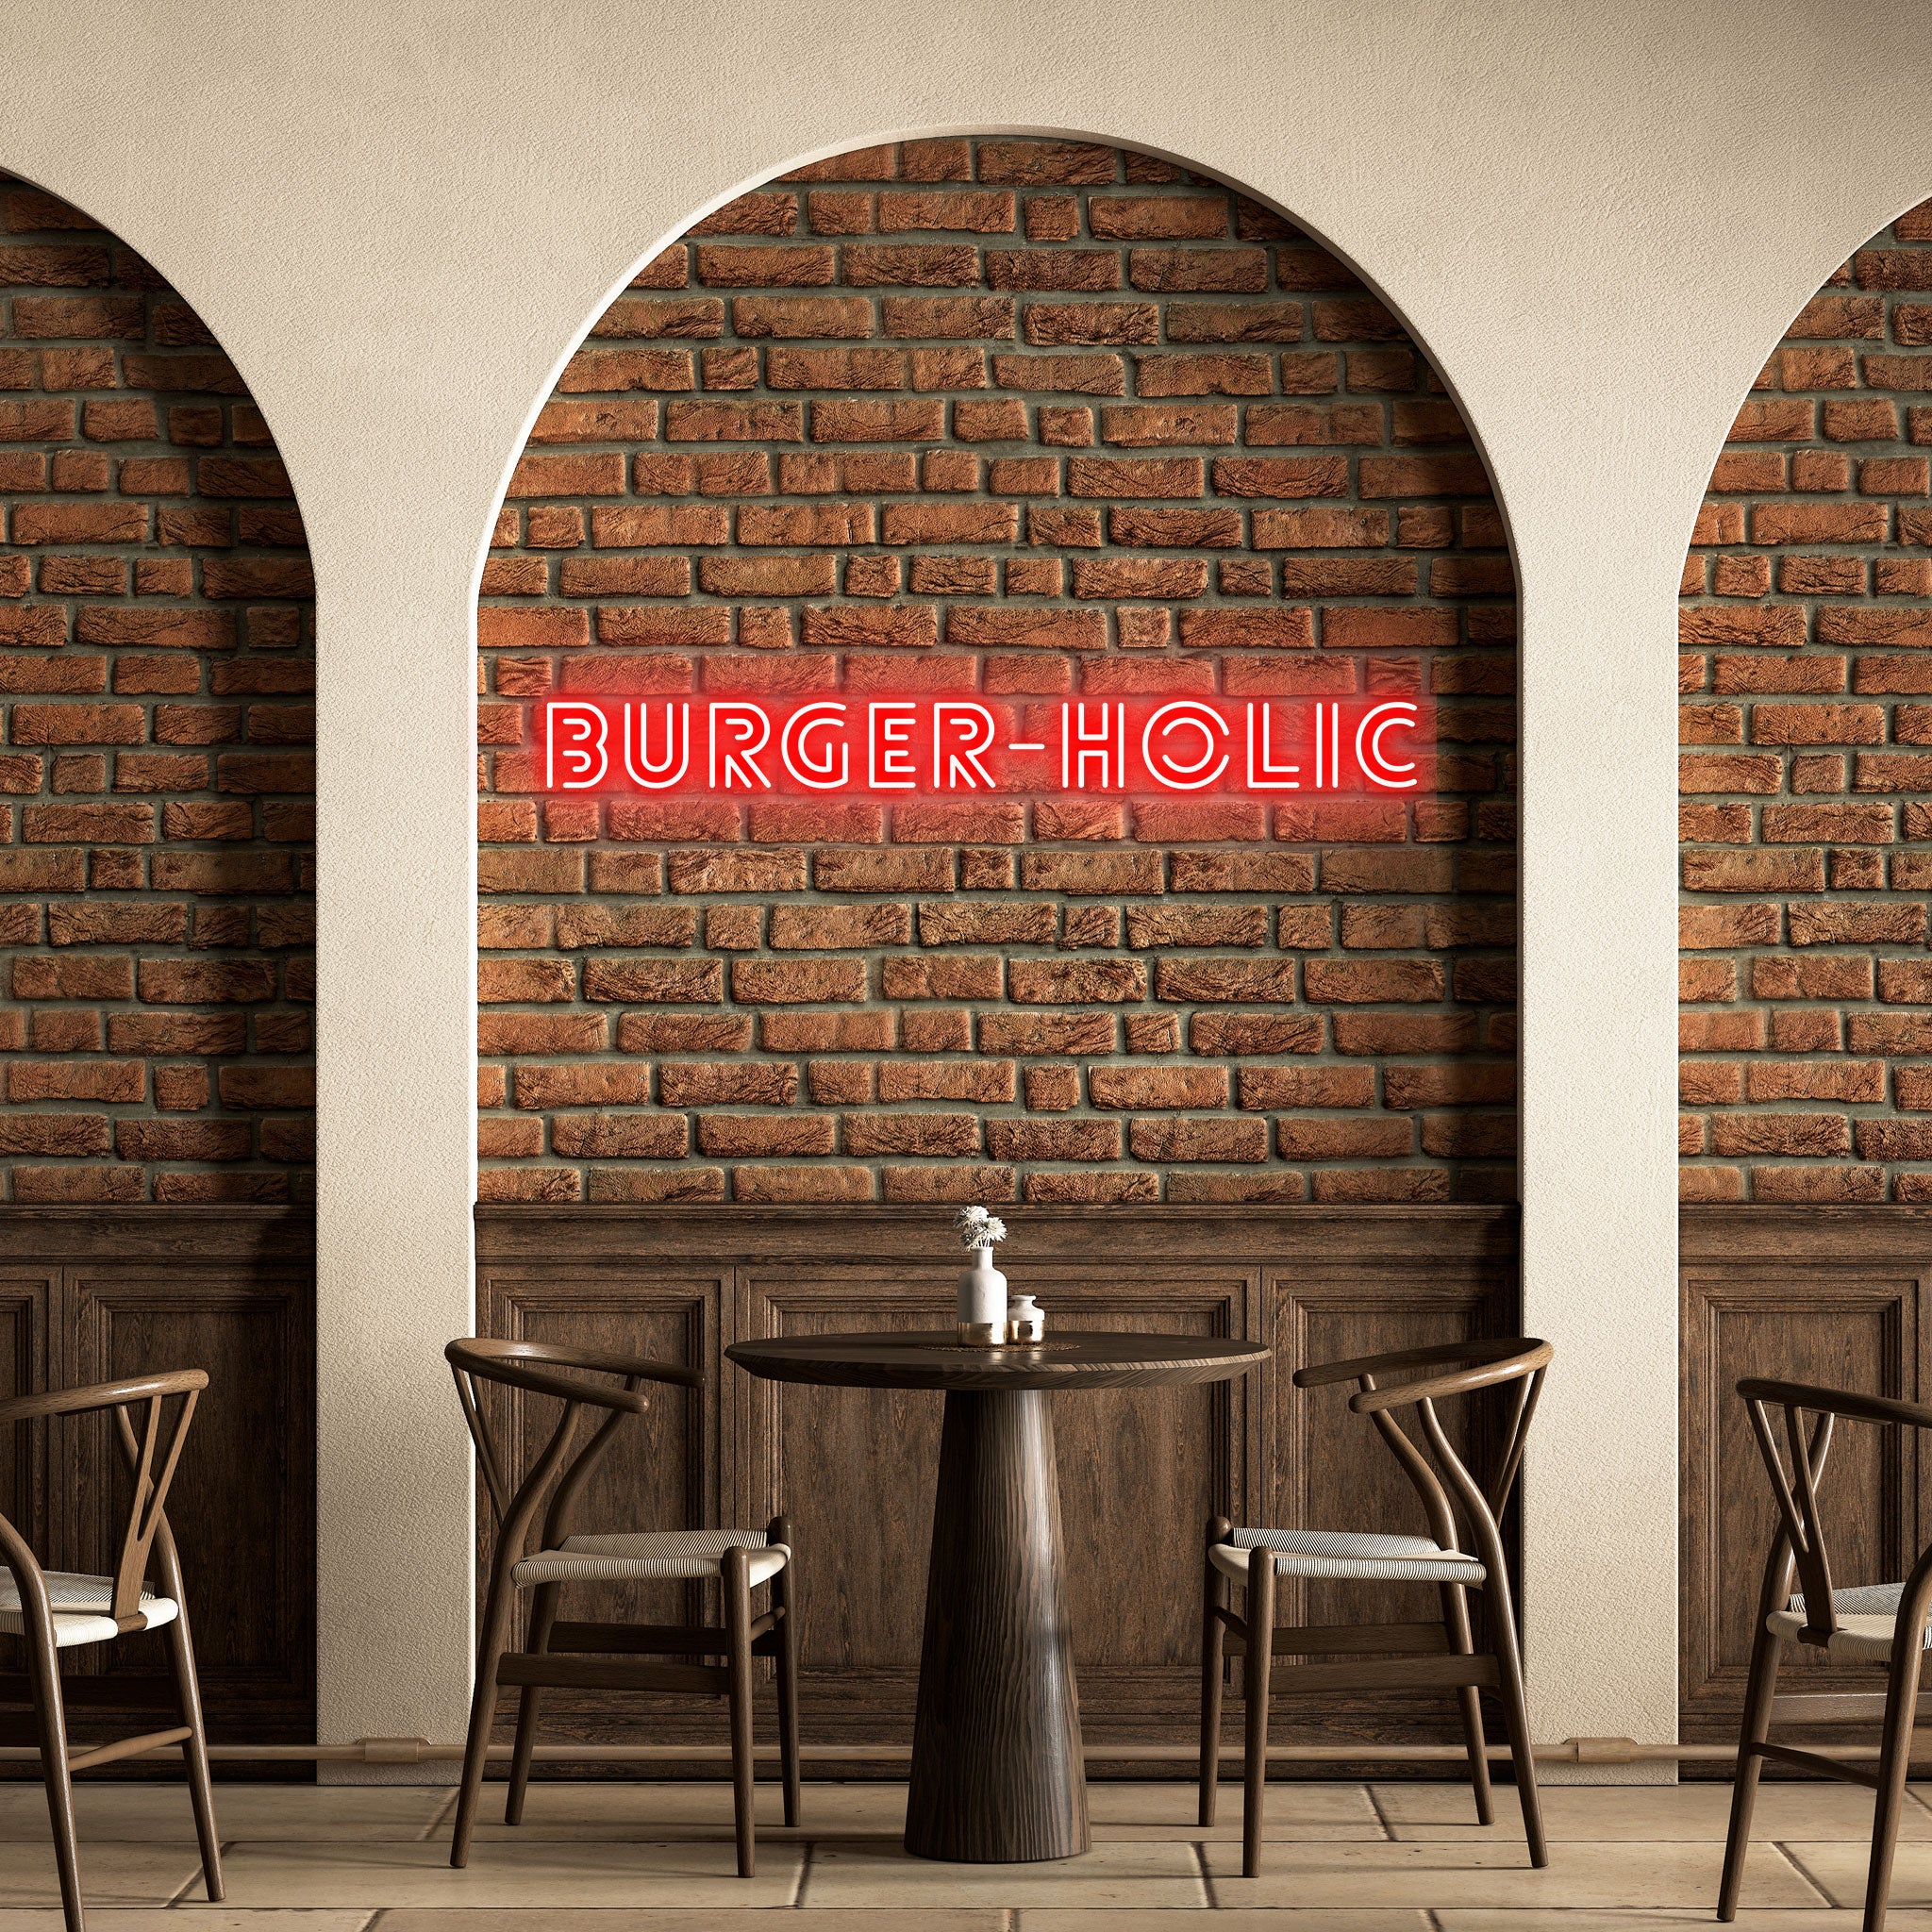 Burger-holic - Neon Sign - Burger Venue